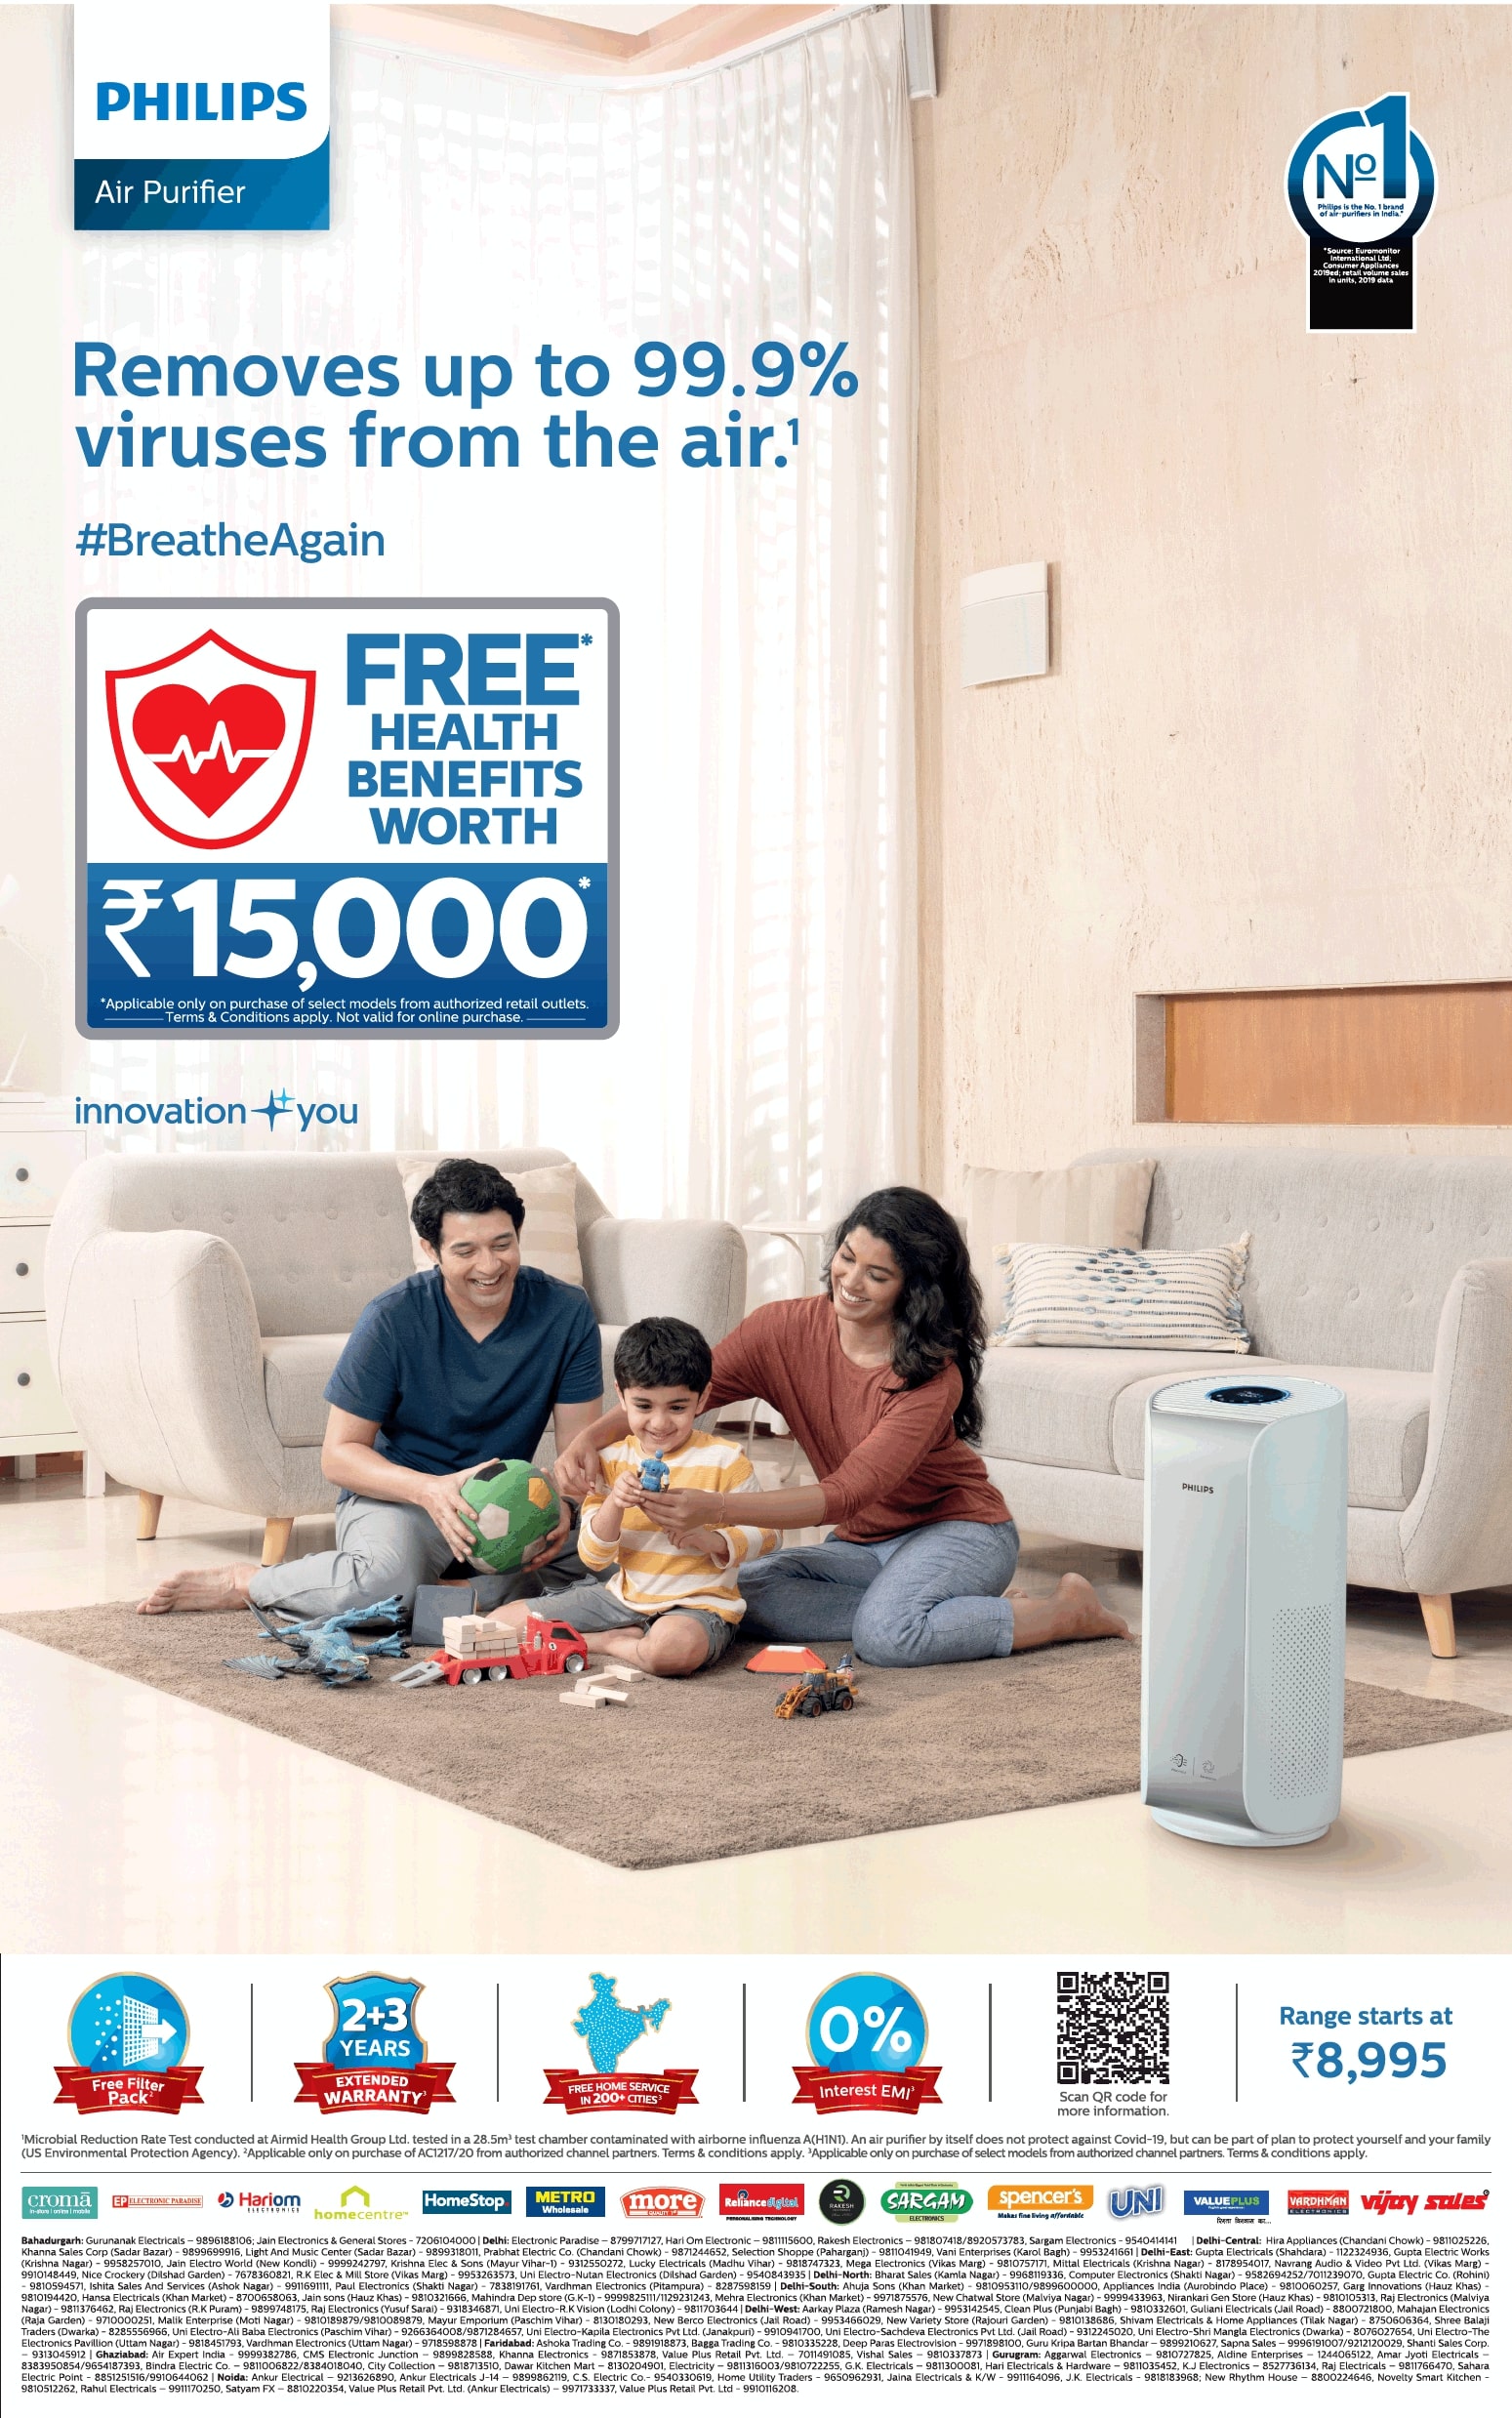 philips-air-purifier-free-health-benefits-worth-rs-15000-ad-delhi-times-1-11-2020